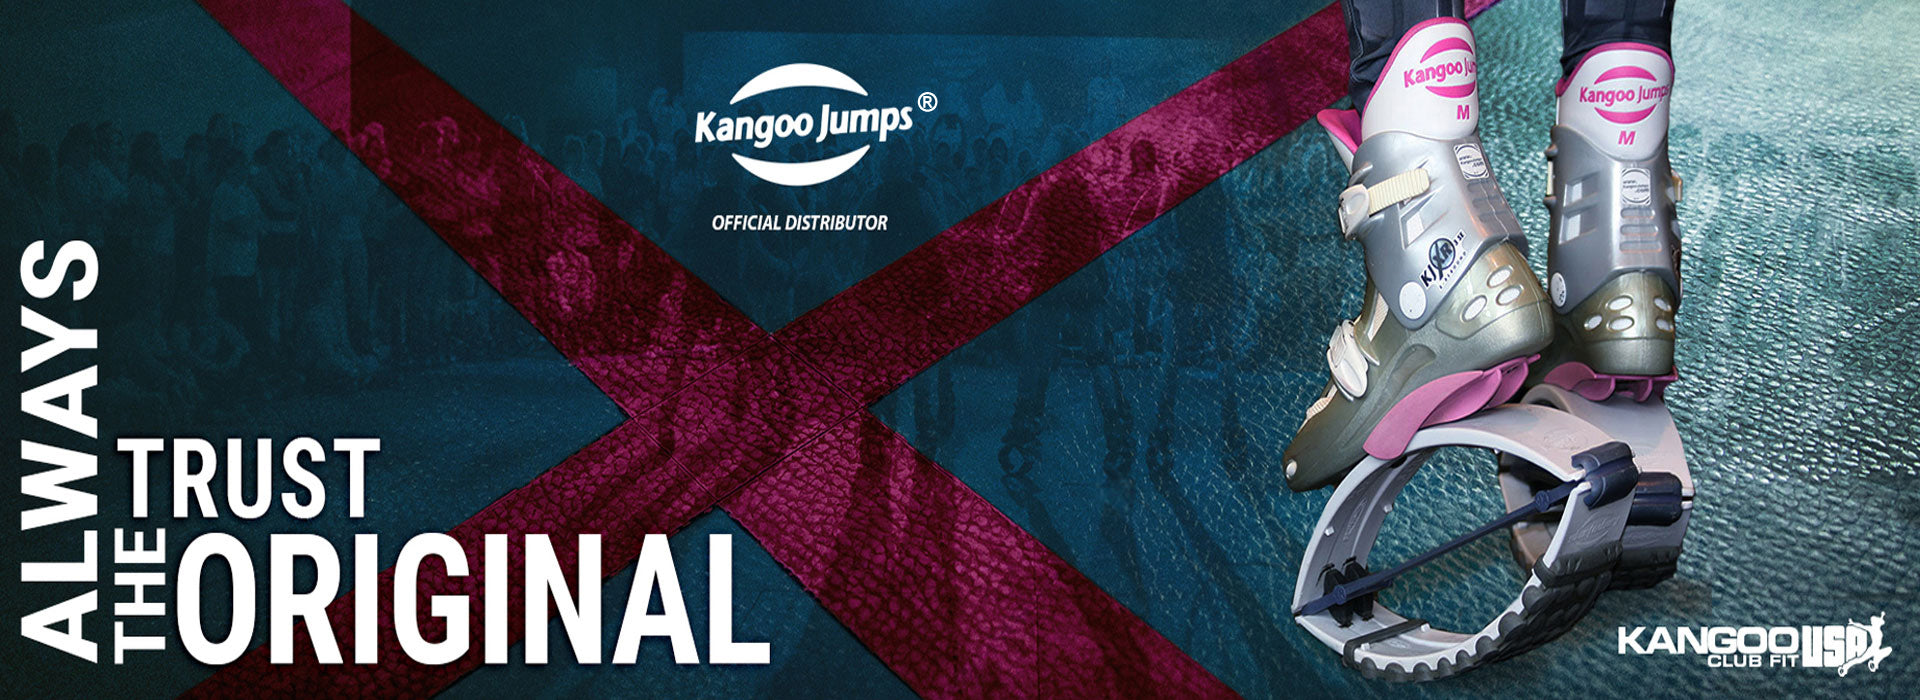  Kangaroo Jump Shoes Gen 2 Series, Bounce Shoes, Exercise &  Fitness Boots, Workout Jumps, Women & Men